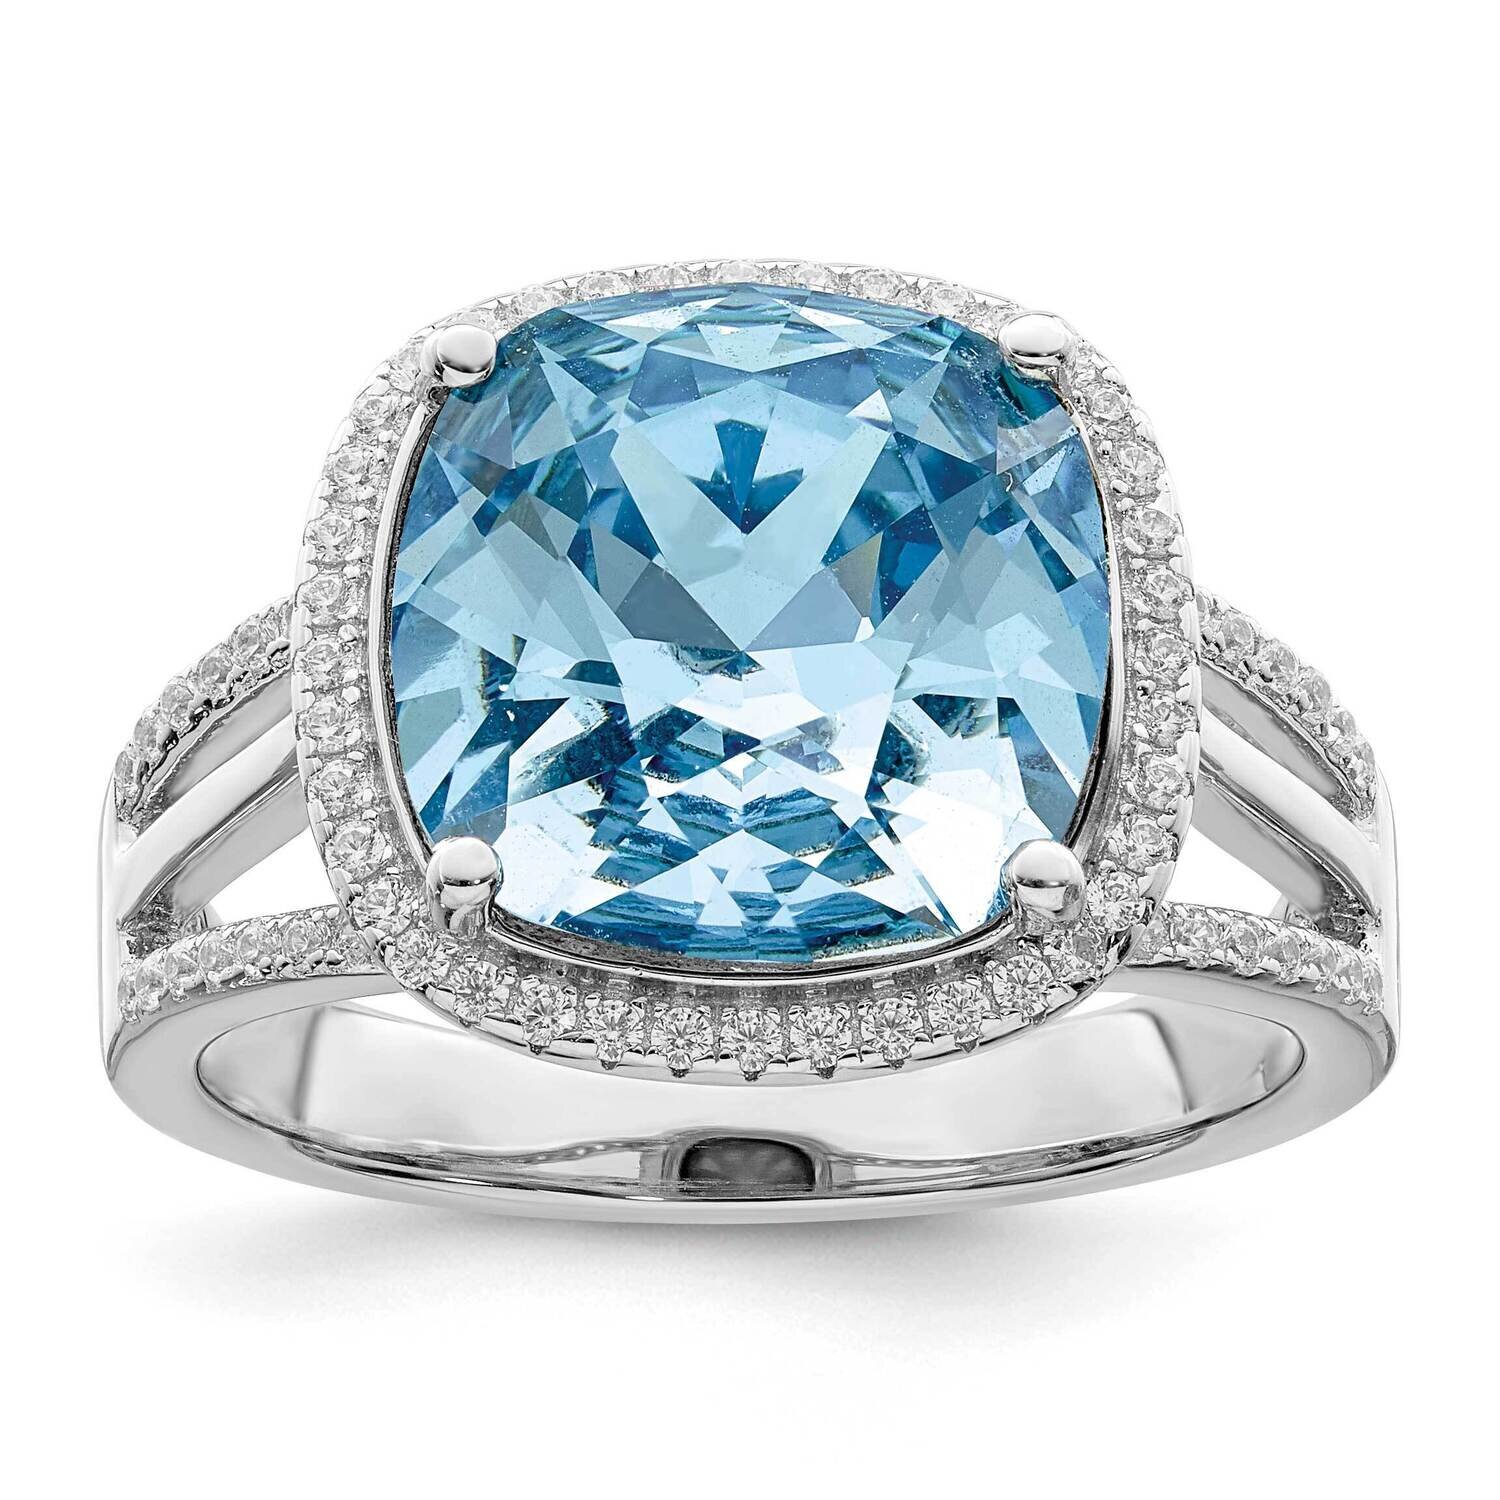 CZ Diamond & Blue Swarovski Crystal Ring Sterling Silver Rhodium-Plated Polished QR7347